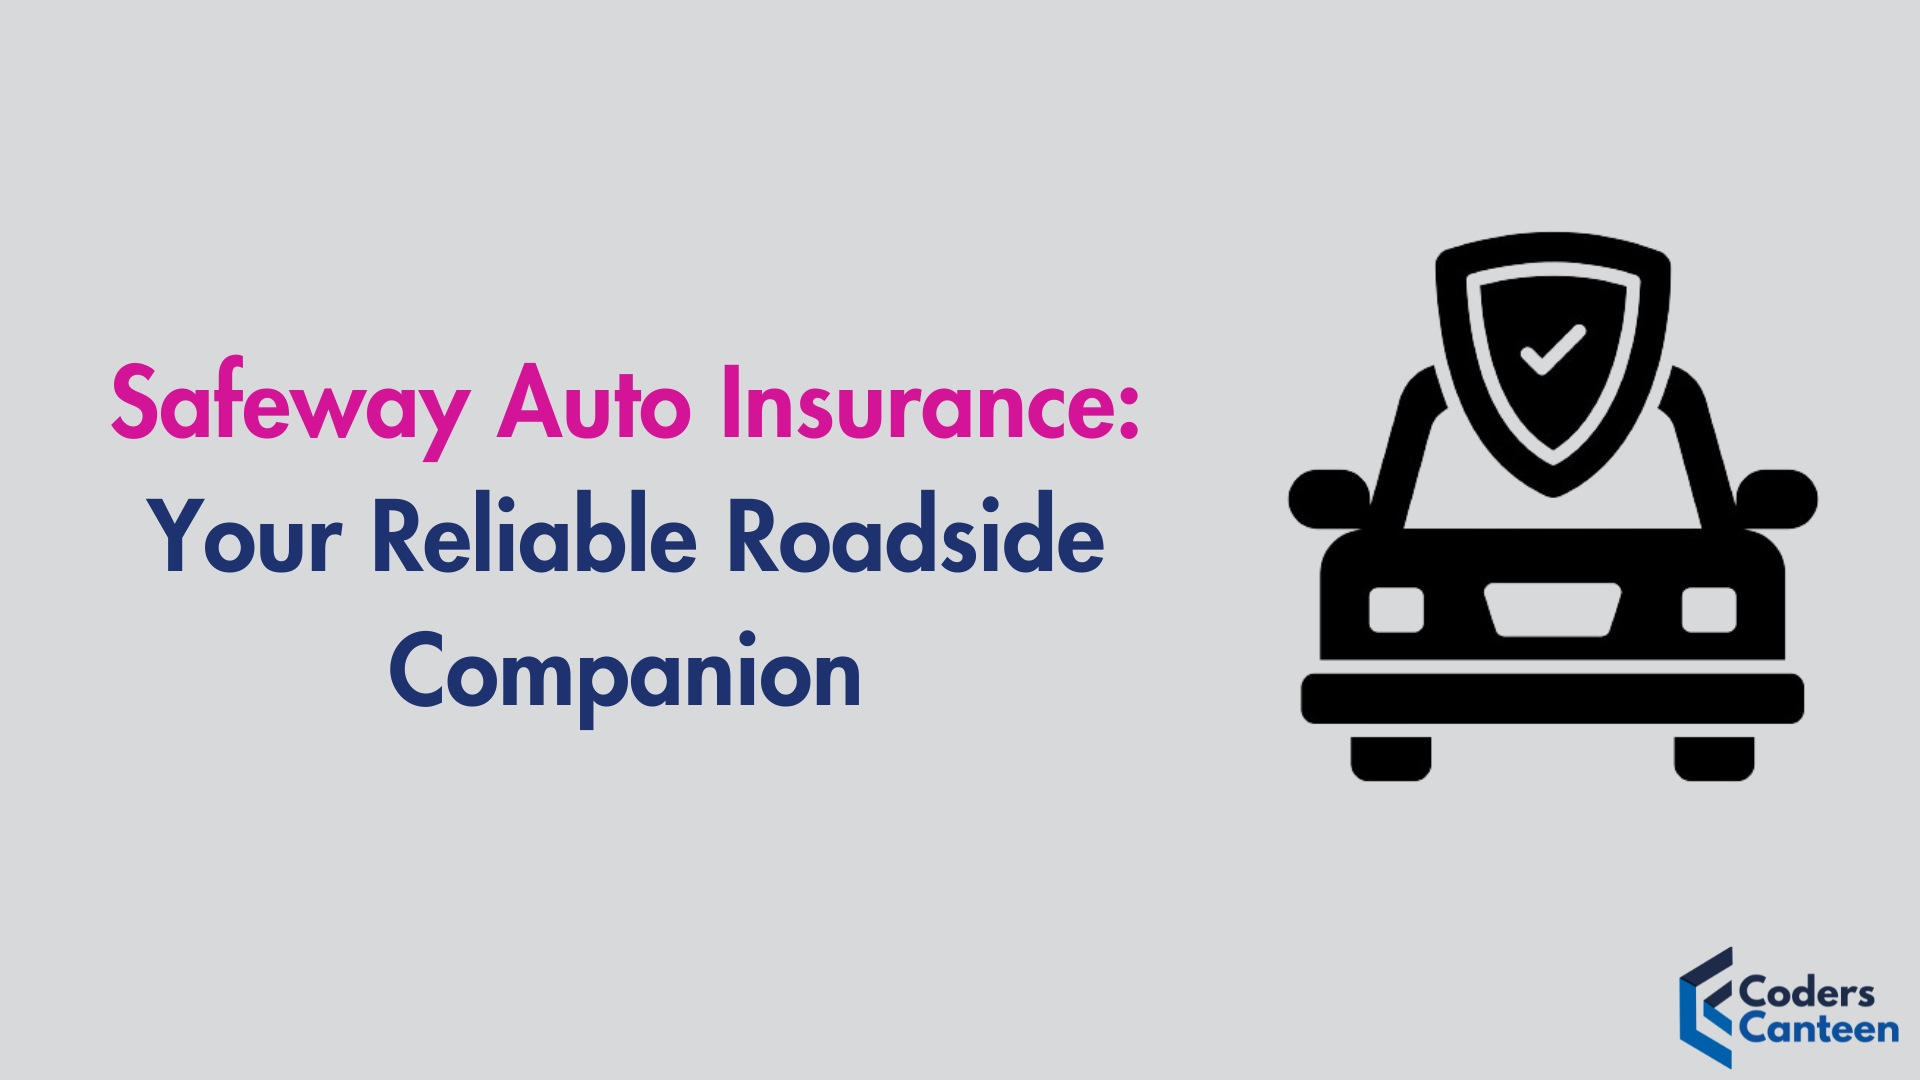 Safeway Auto Insurance: Your Reliable Roadside Companion